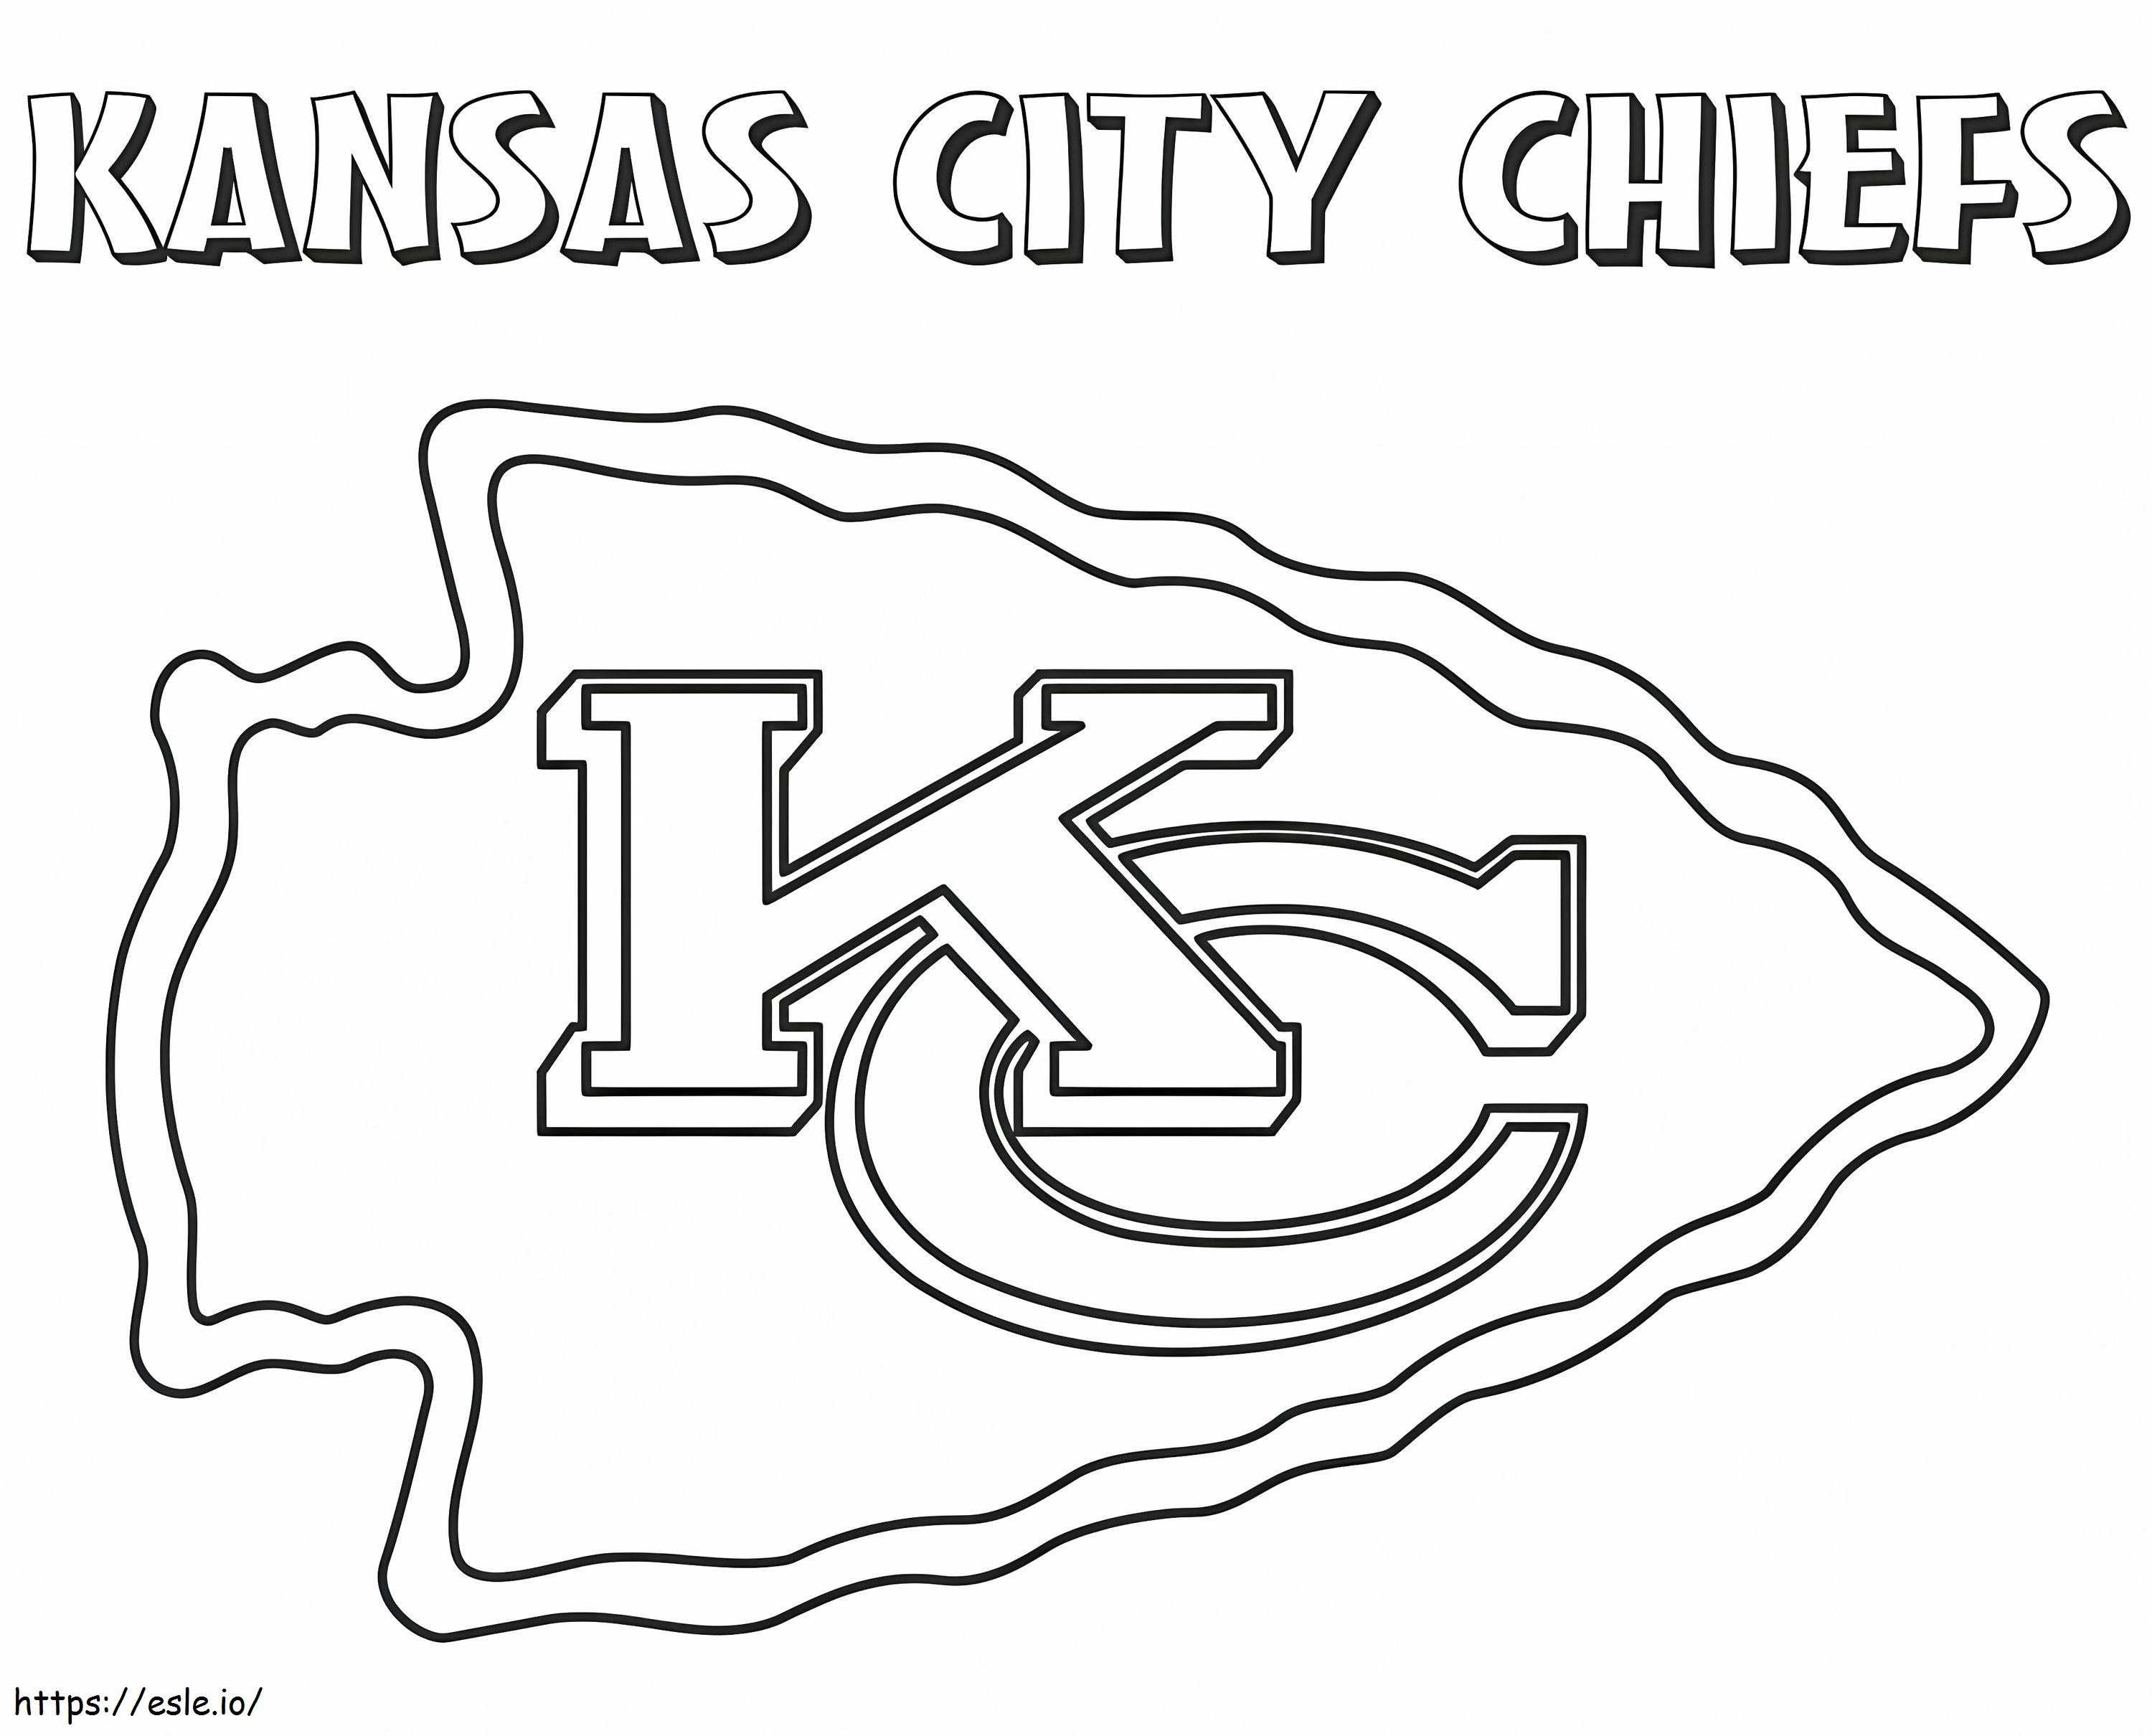 Imprimir Chefes de Kansas City para colorir